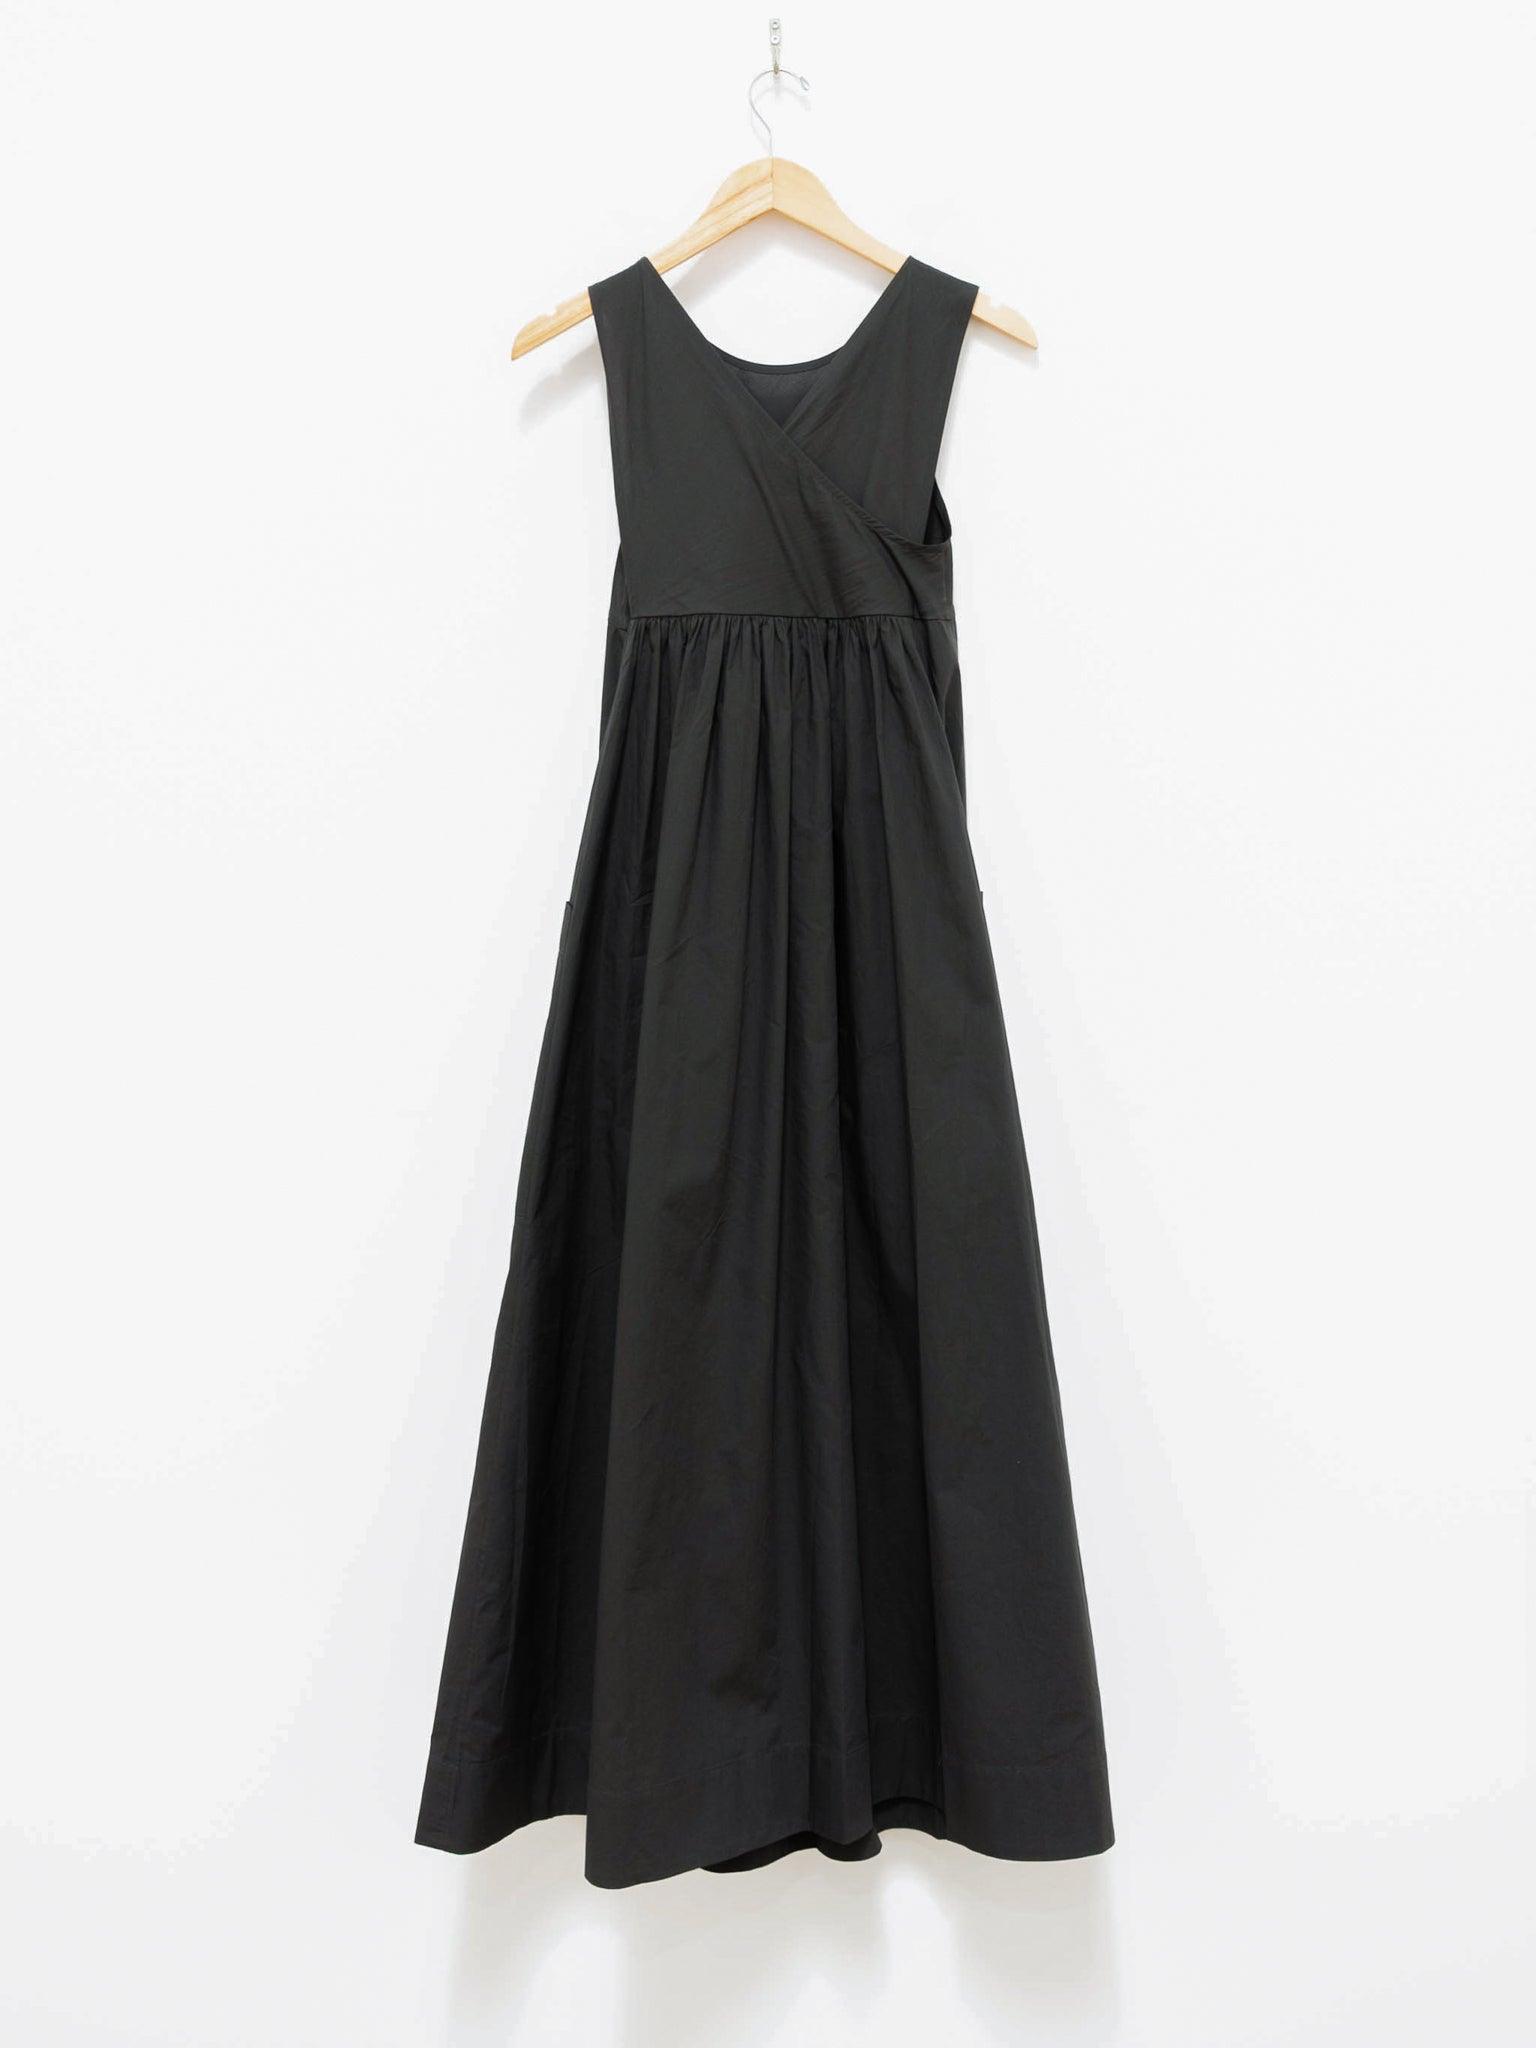 Namu Shop - Toogood The Weaver Dress - Ash LW Textured Cotton